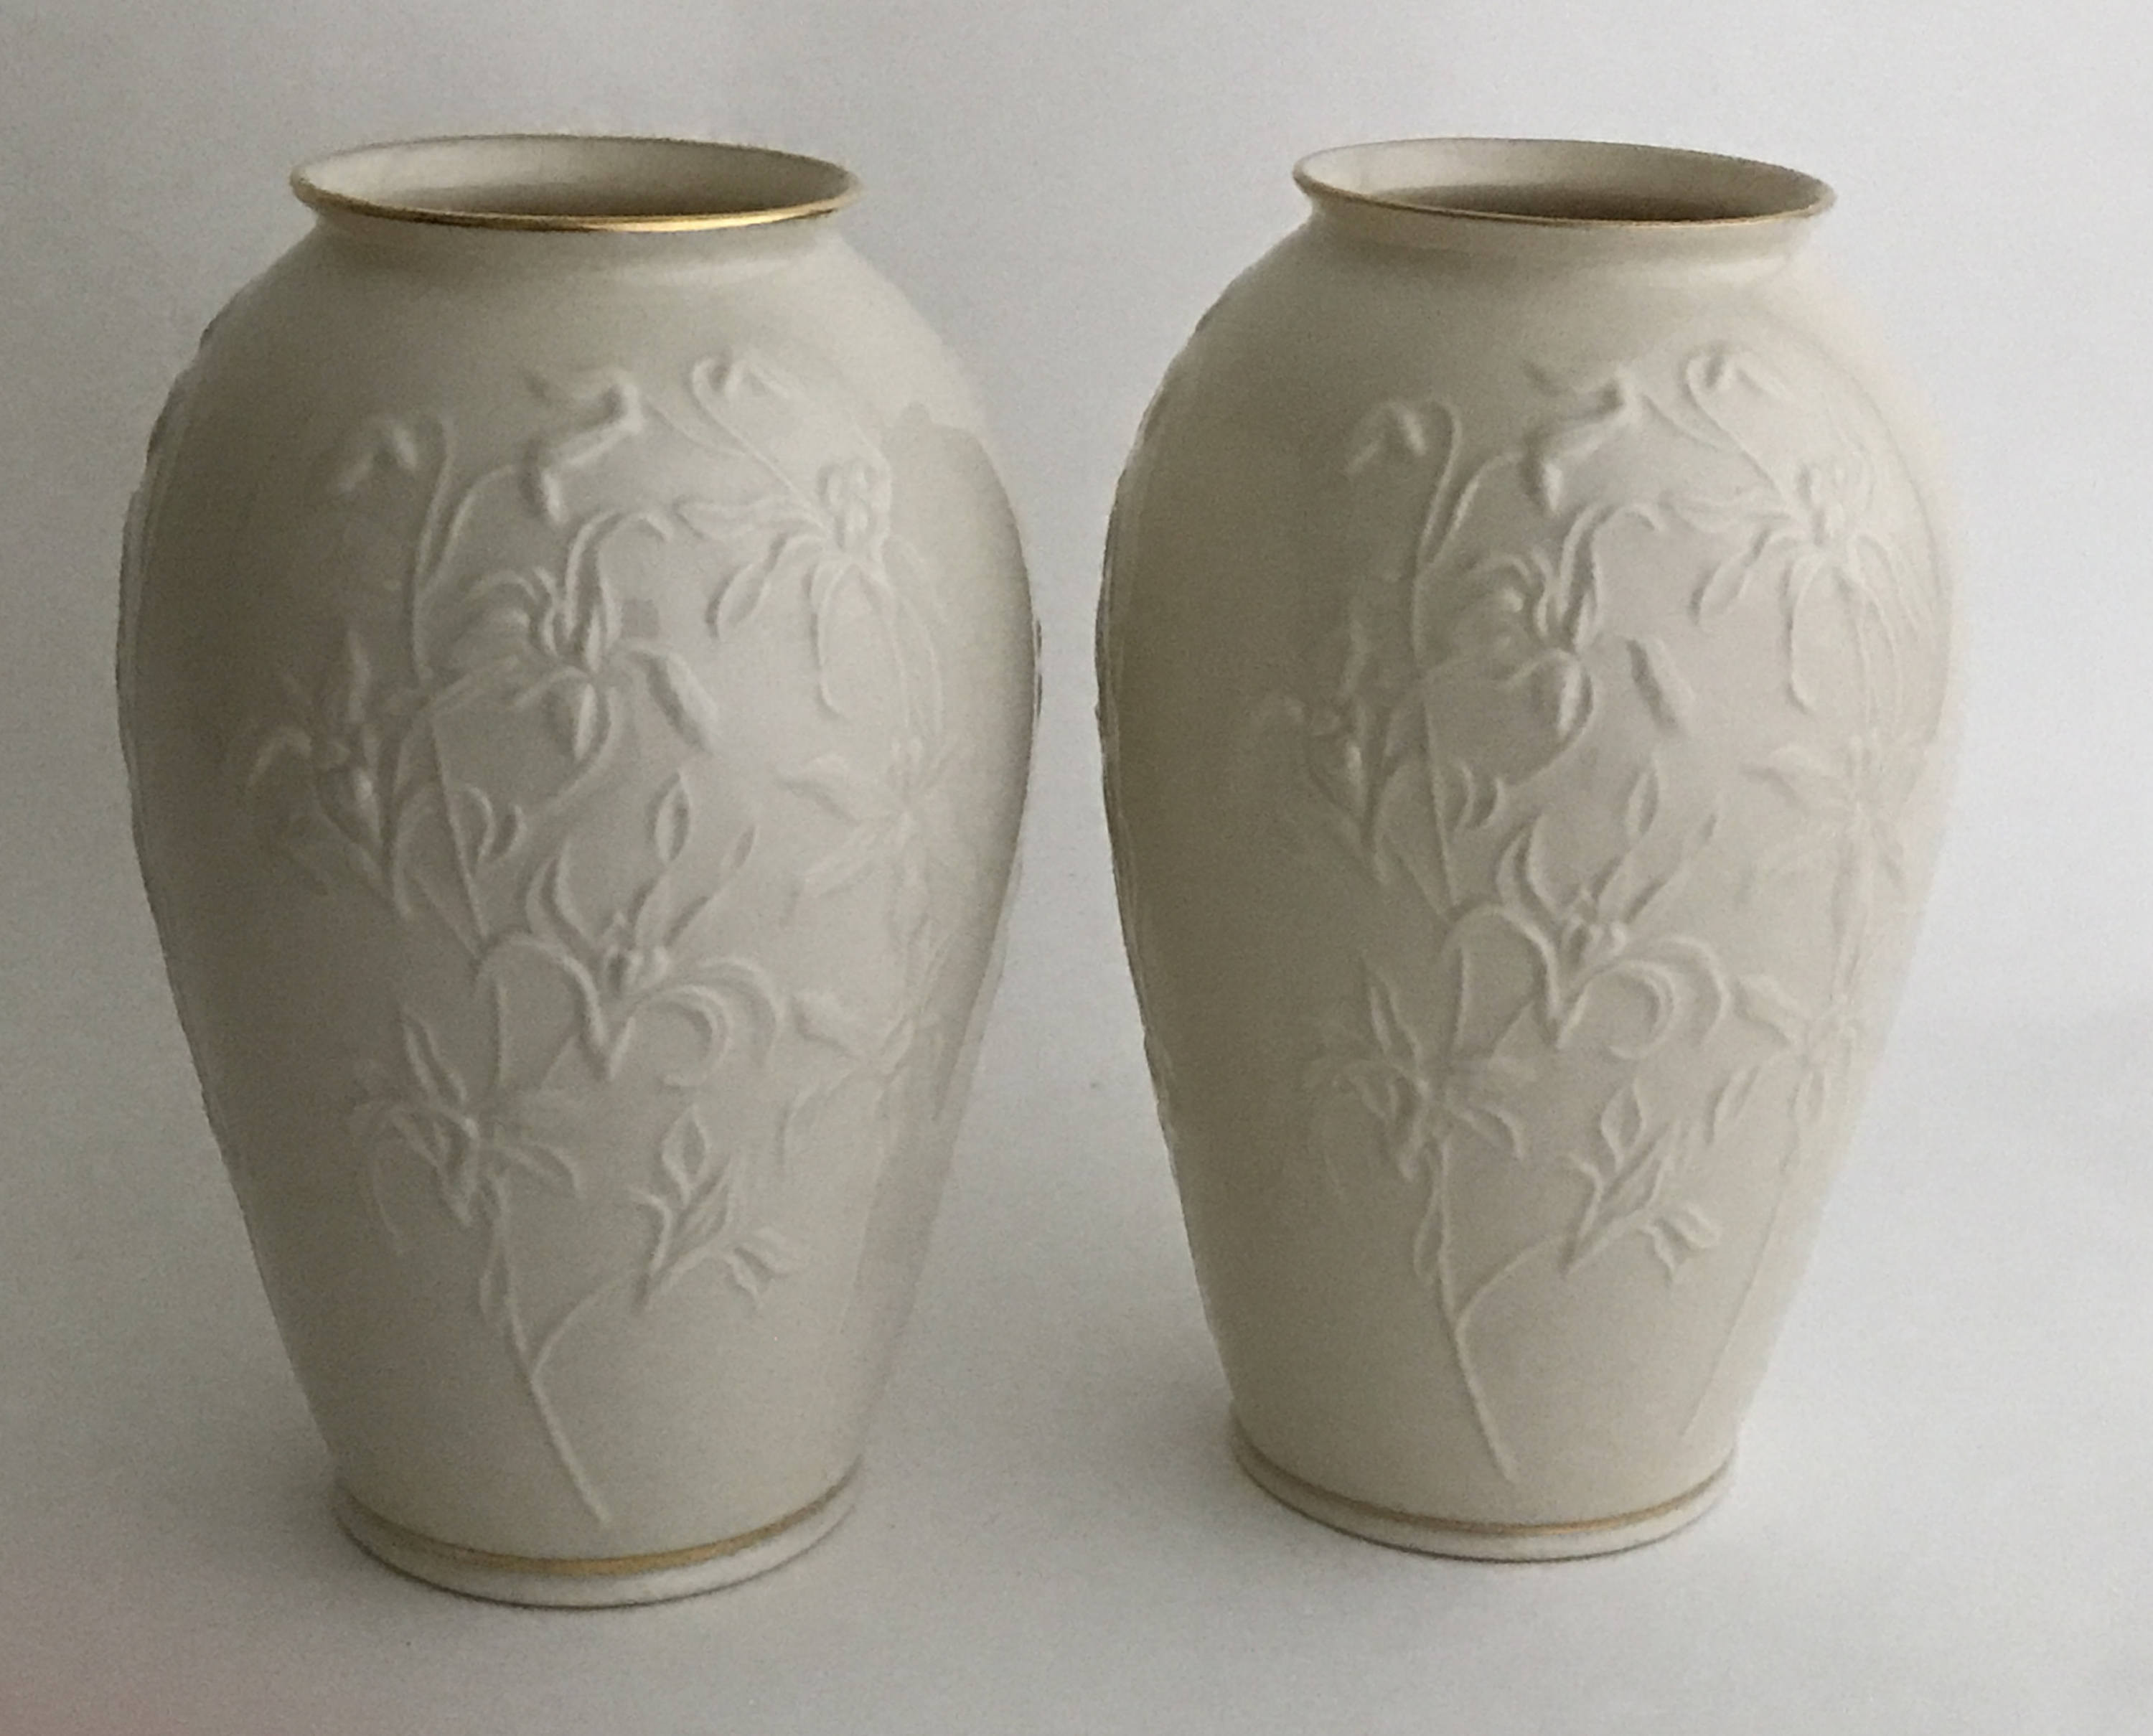 10 Lovable Lenox Bud Vases Set Of 3 2024 free download lenox bud vases set of 3 of lenox china vase vintage lenox vase centennial vase etsy within image 8